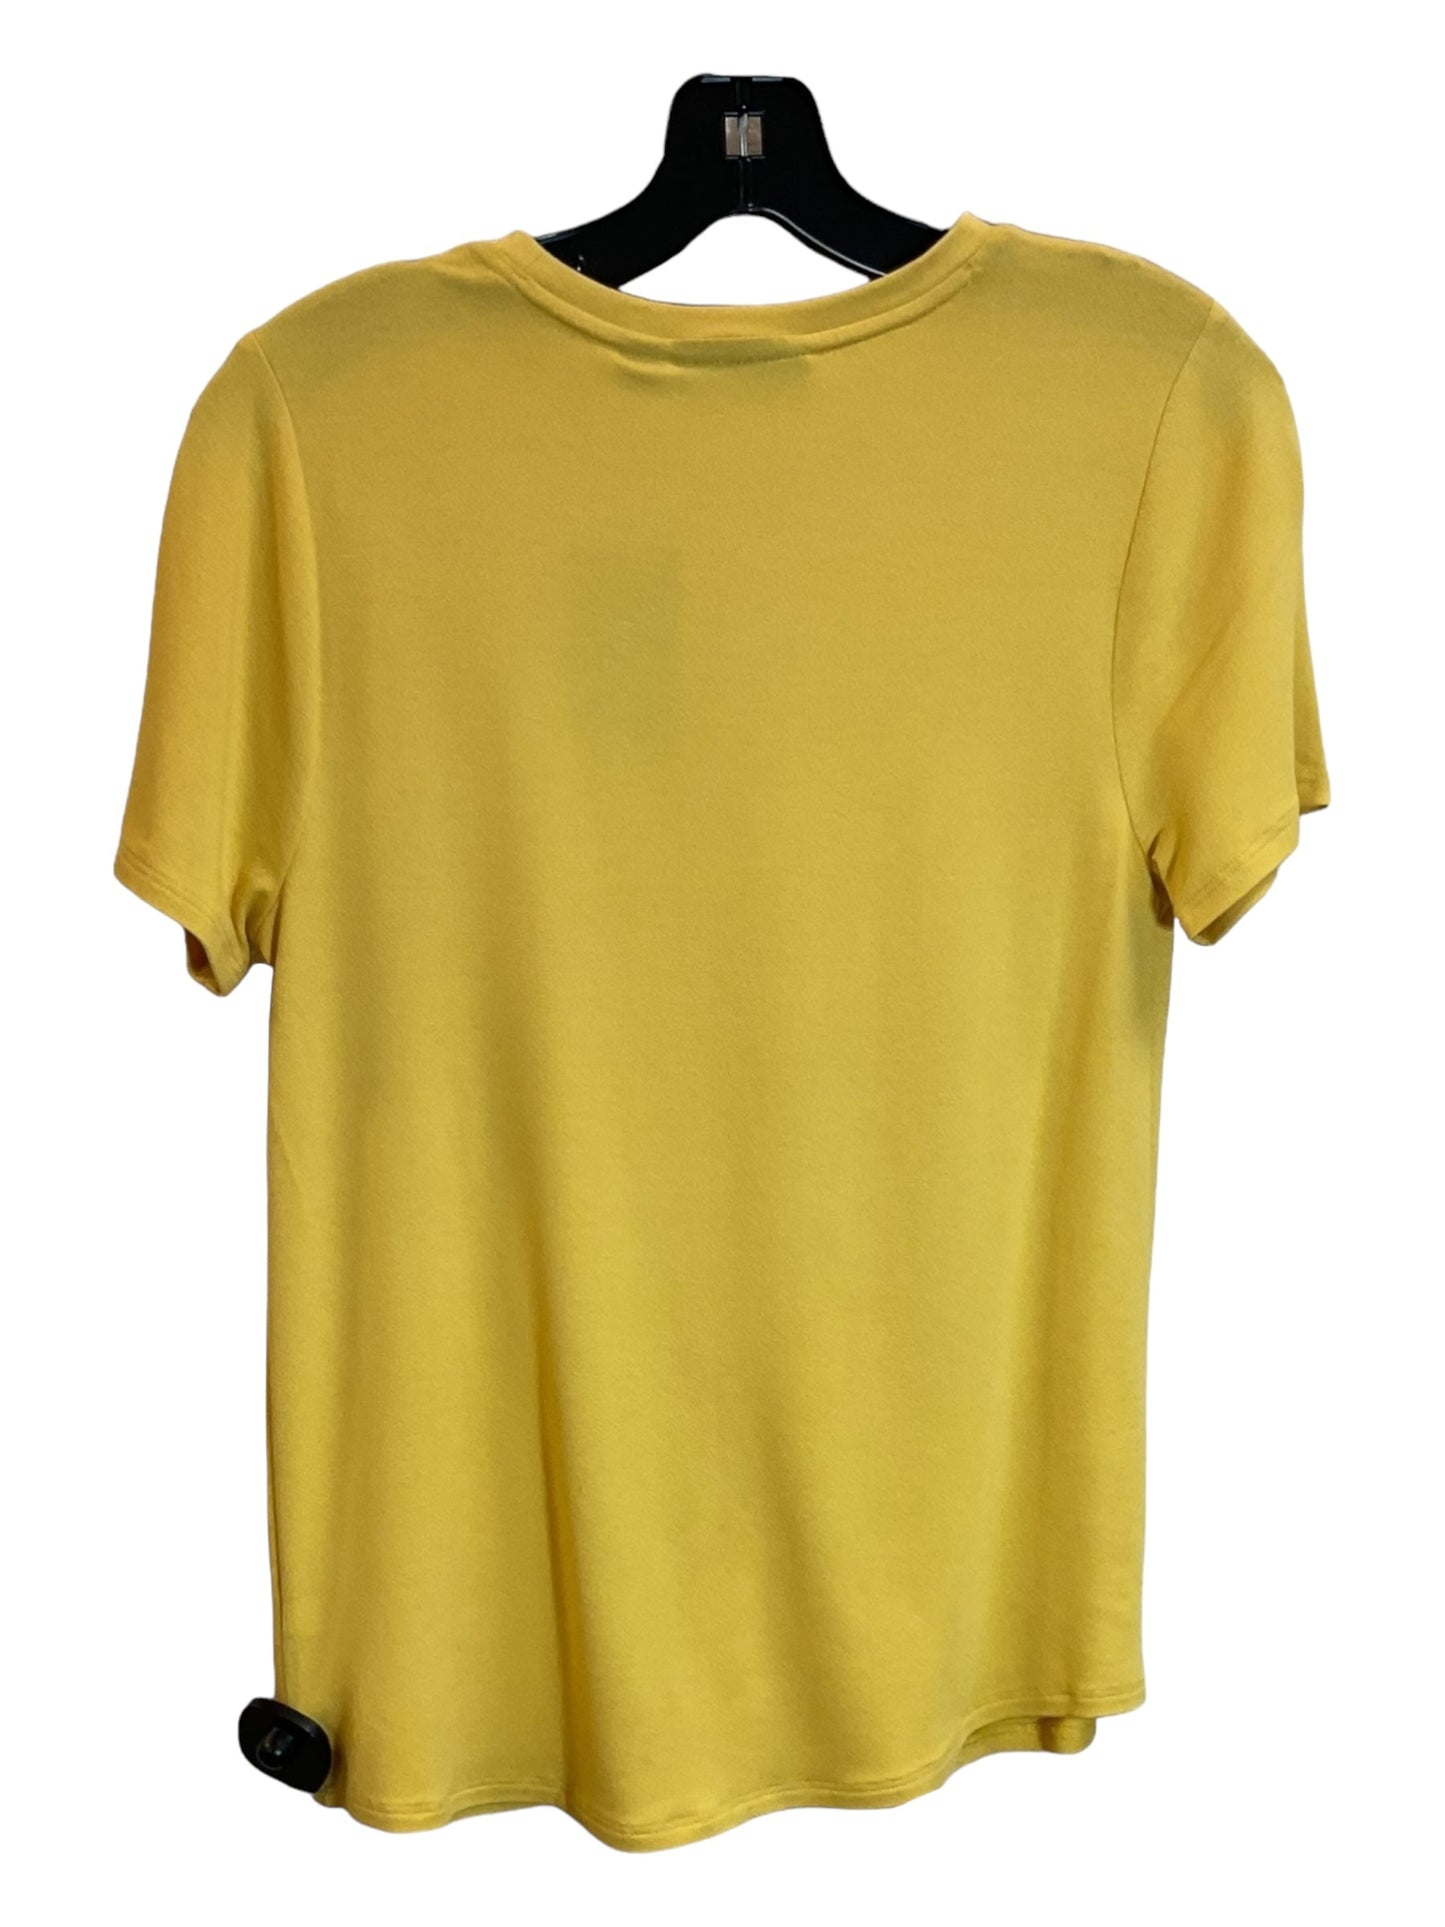 Yellow Top Short Sleeve Apt 9, Size Xs